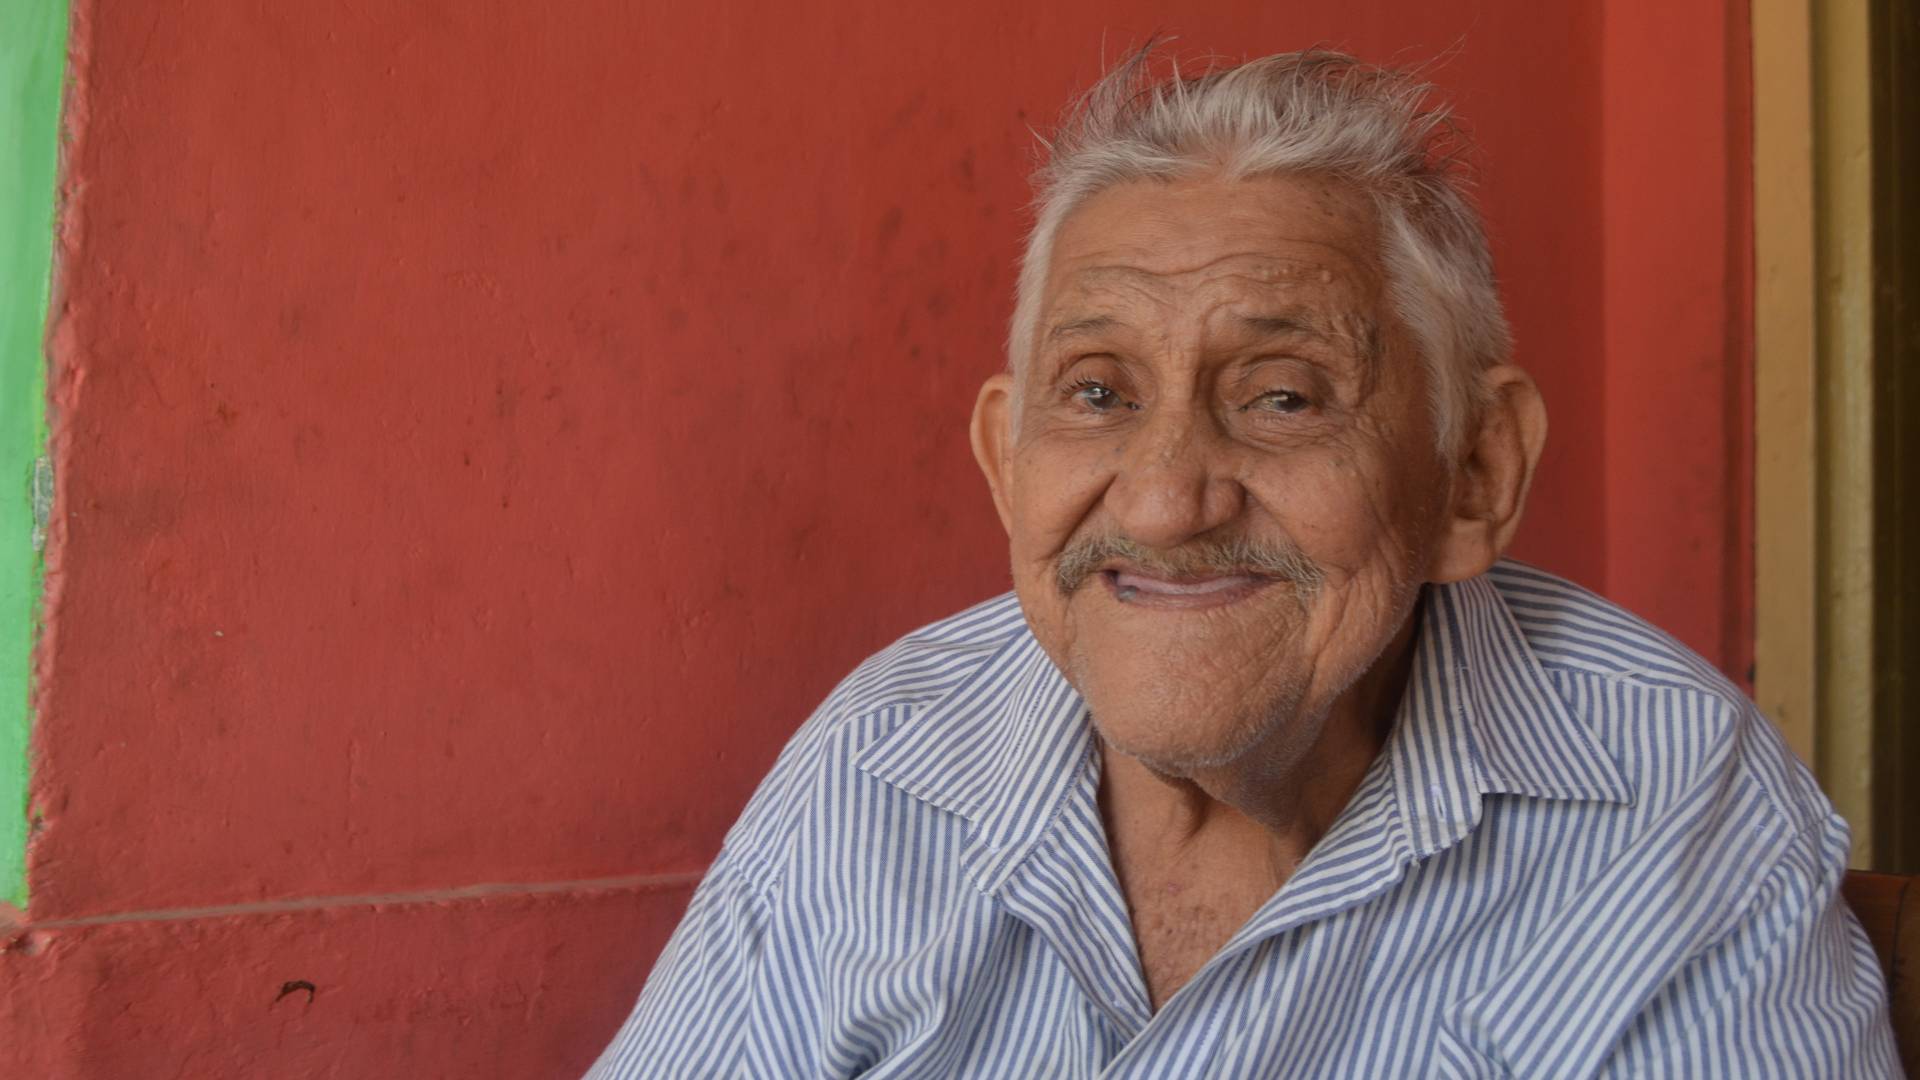 Elderly man smiling at camera